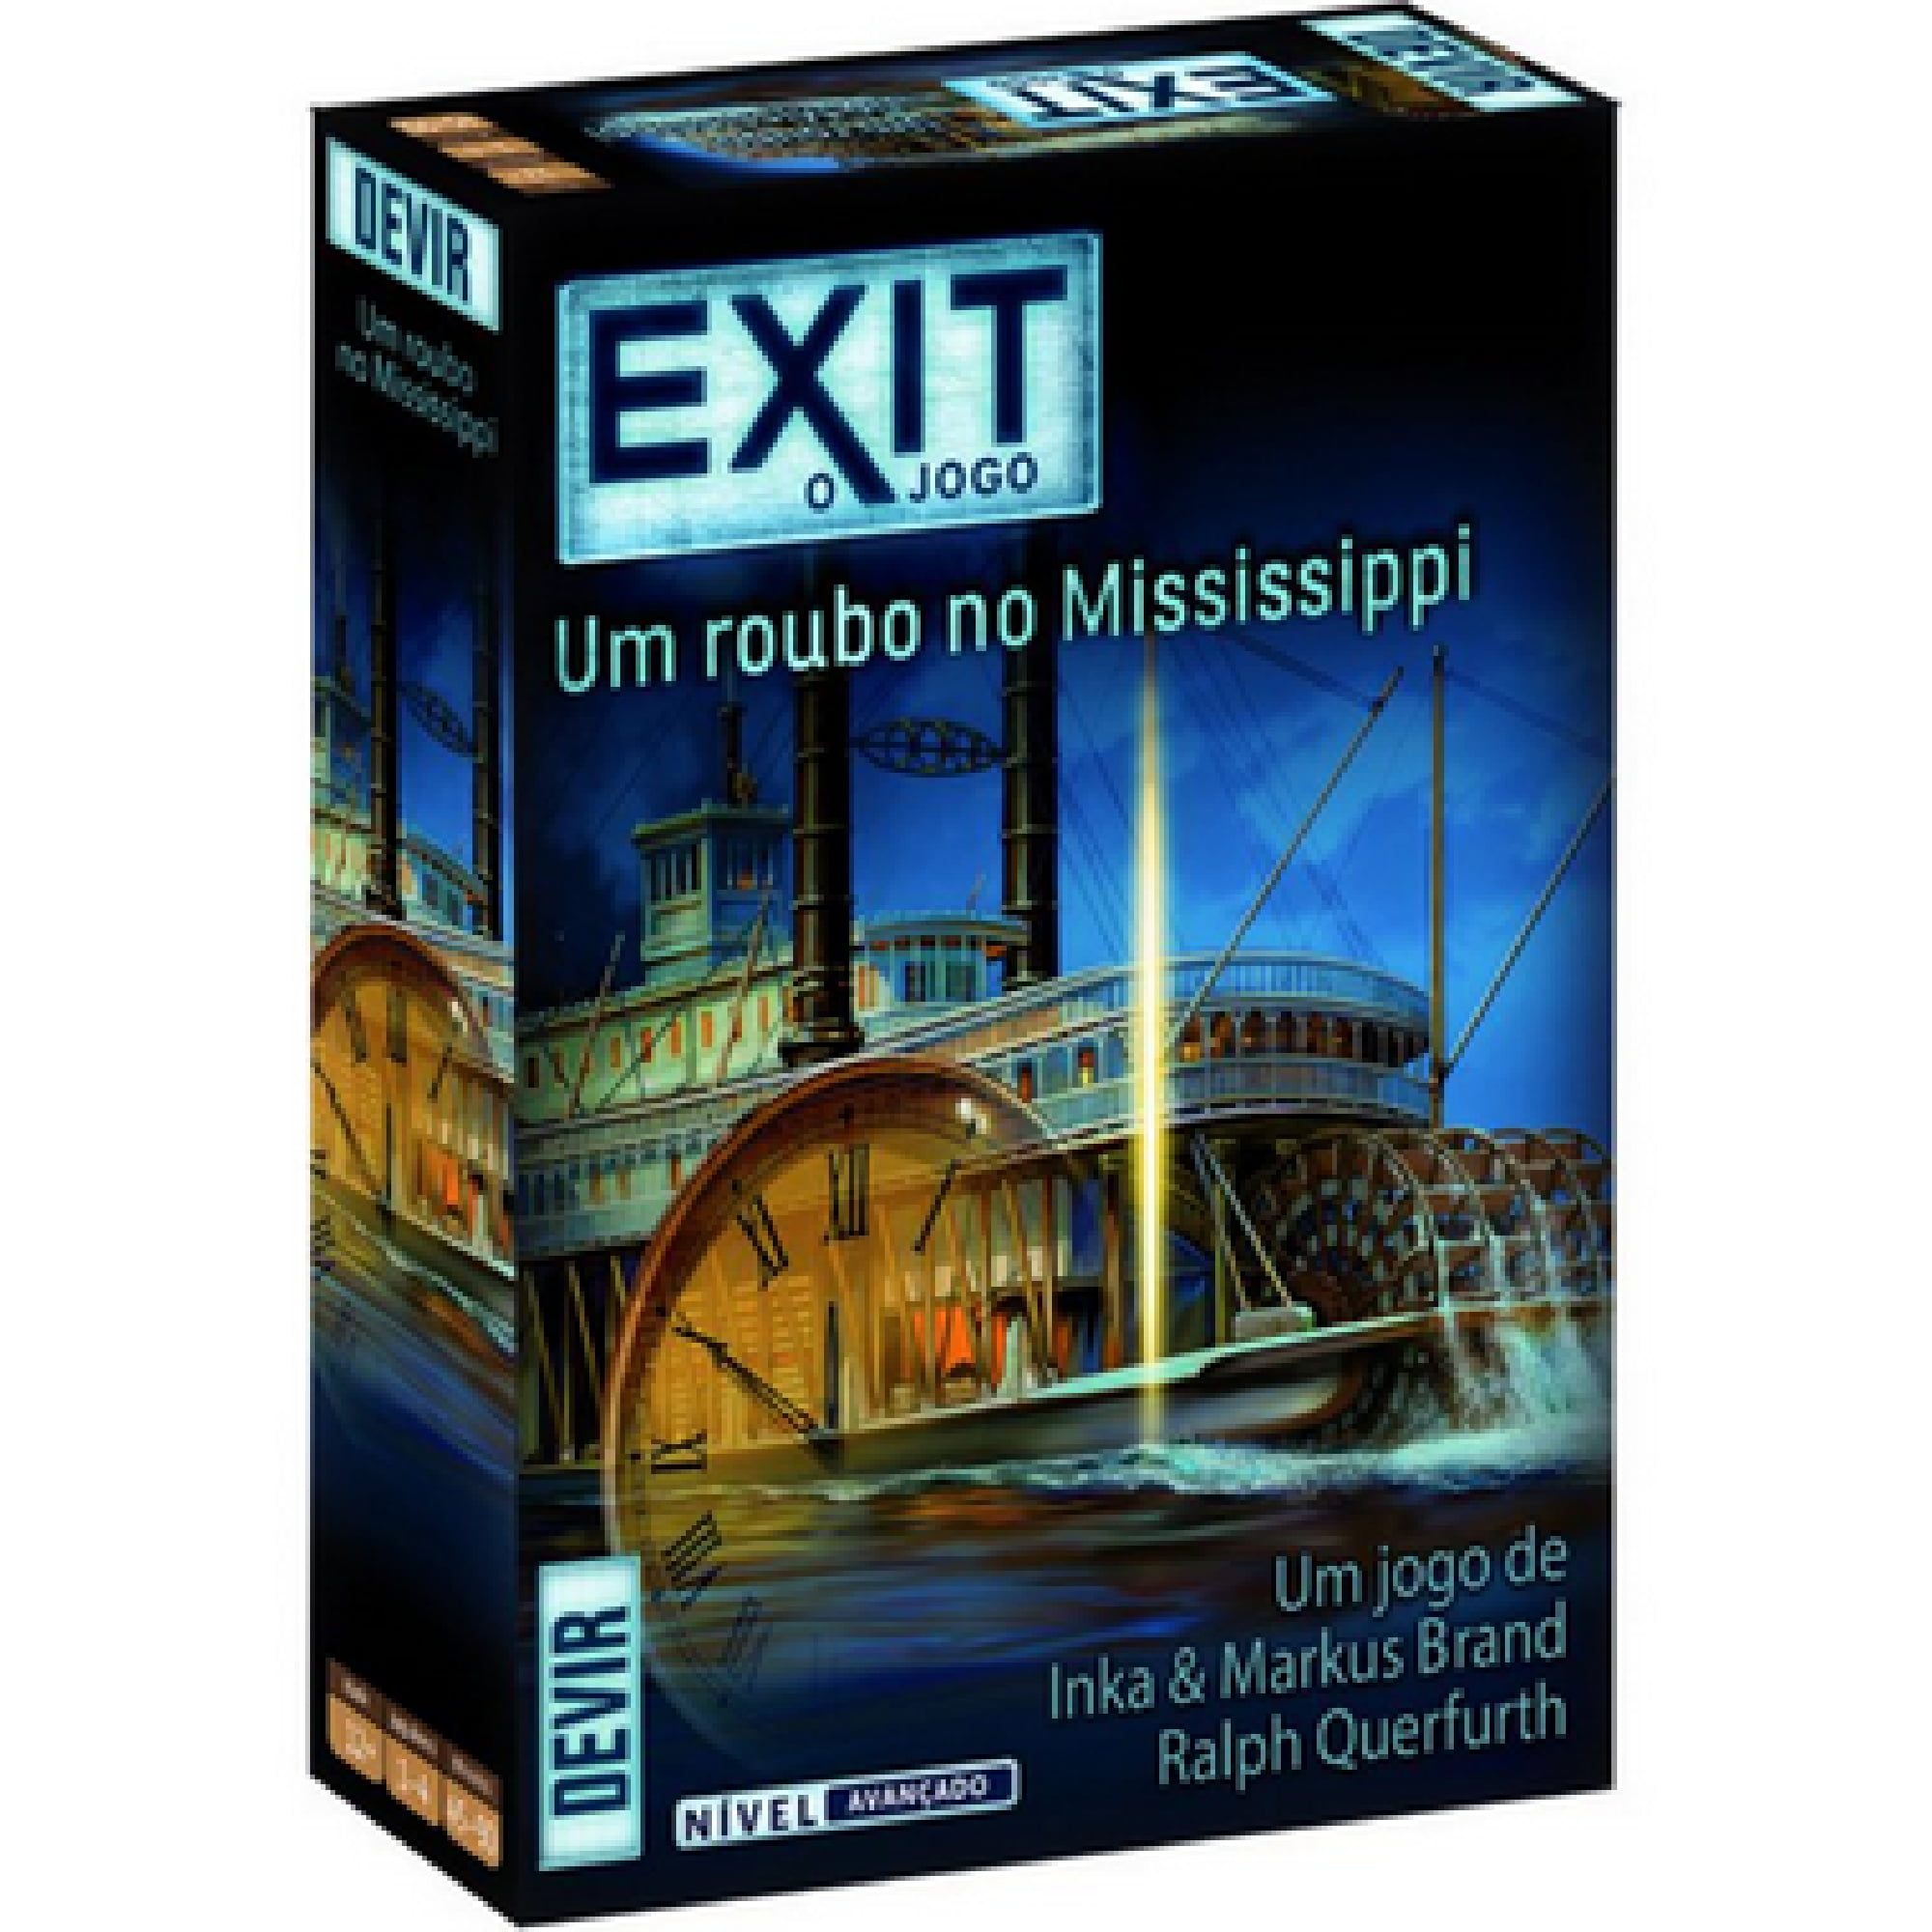 Exit - Um Roubo no Mississipi